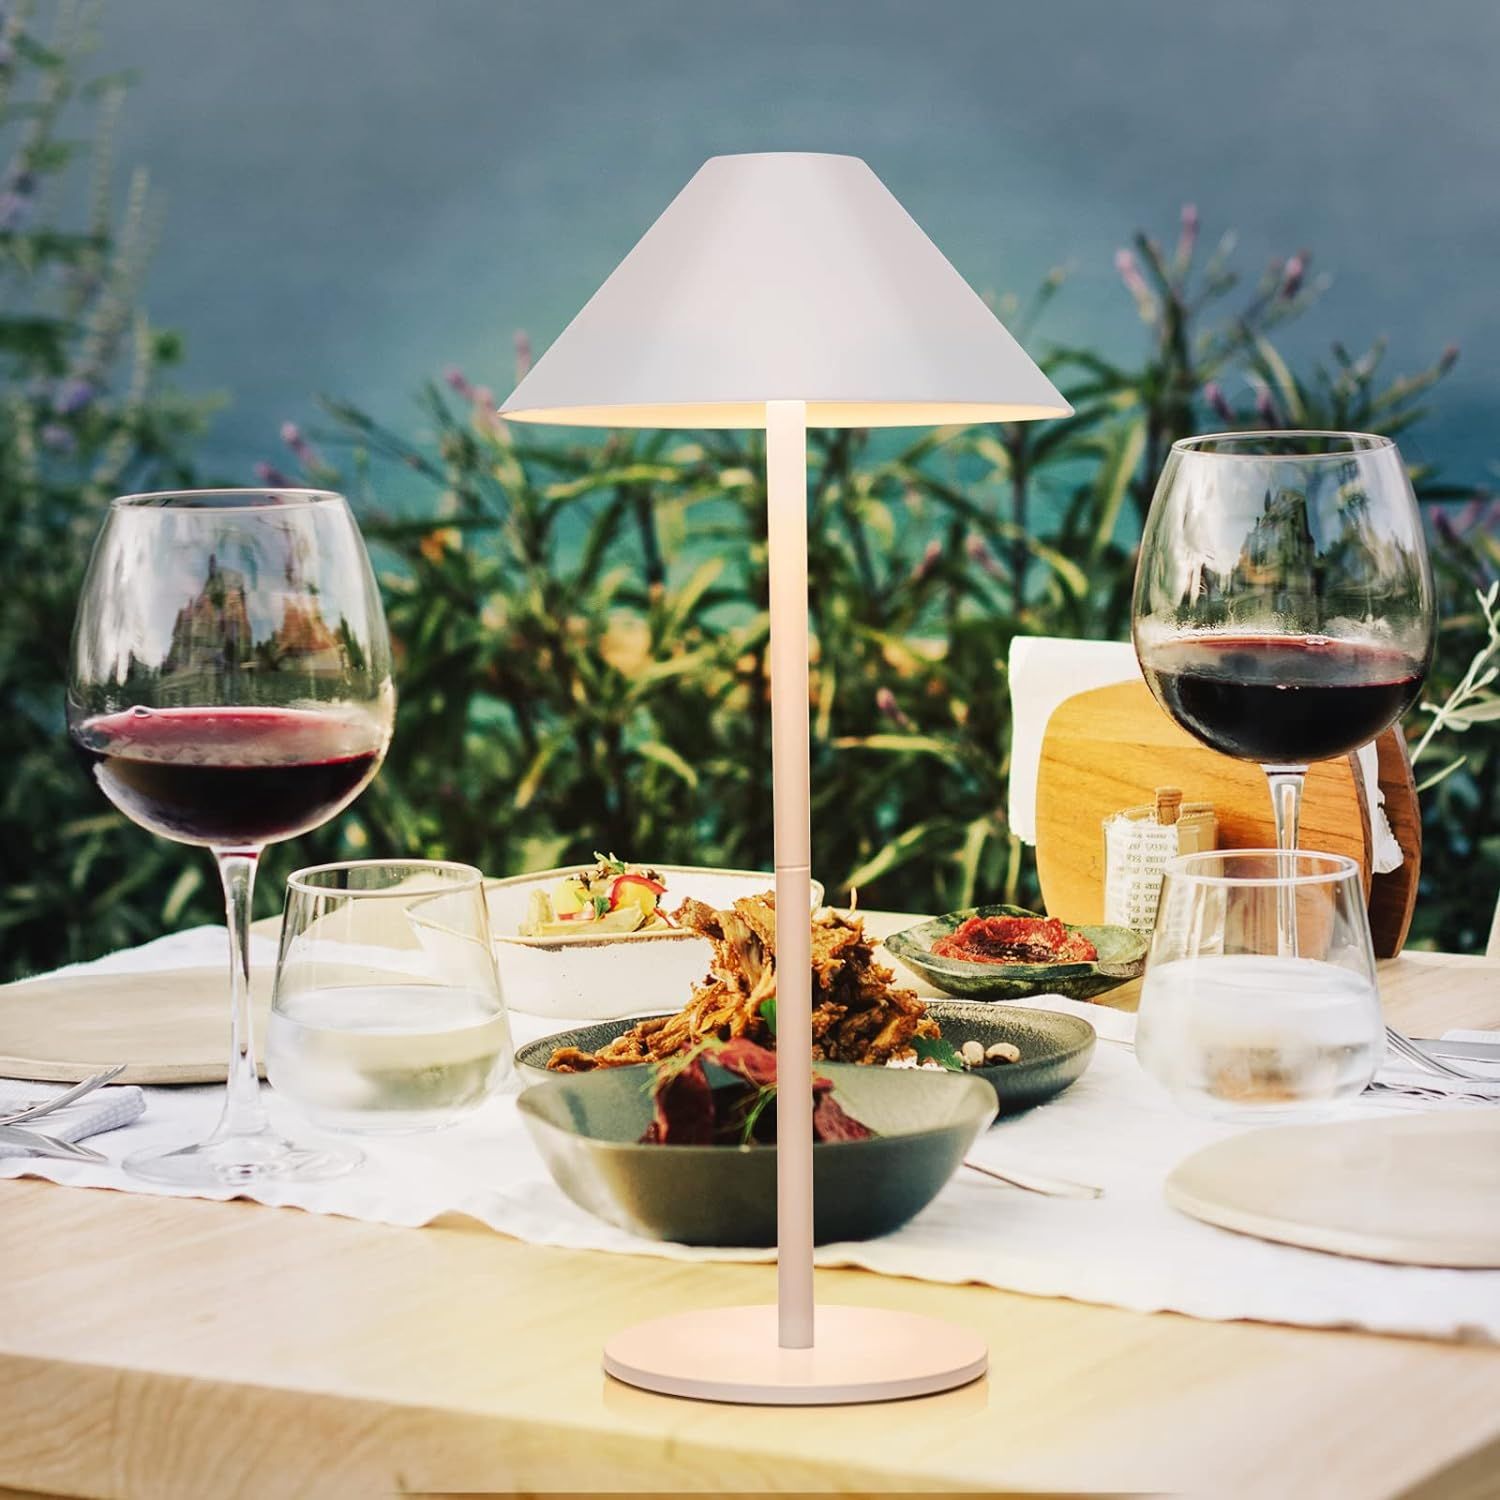 Table lamp BRESS by Romatti